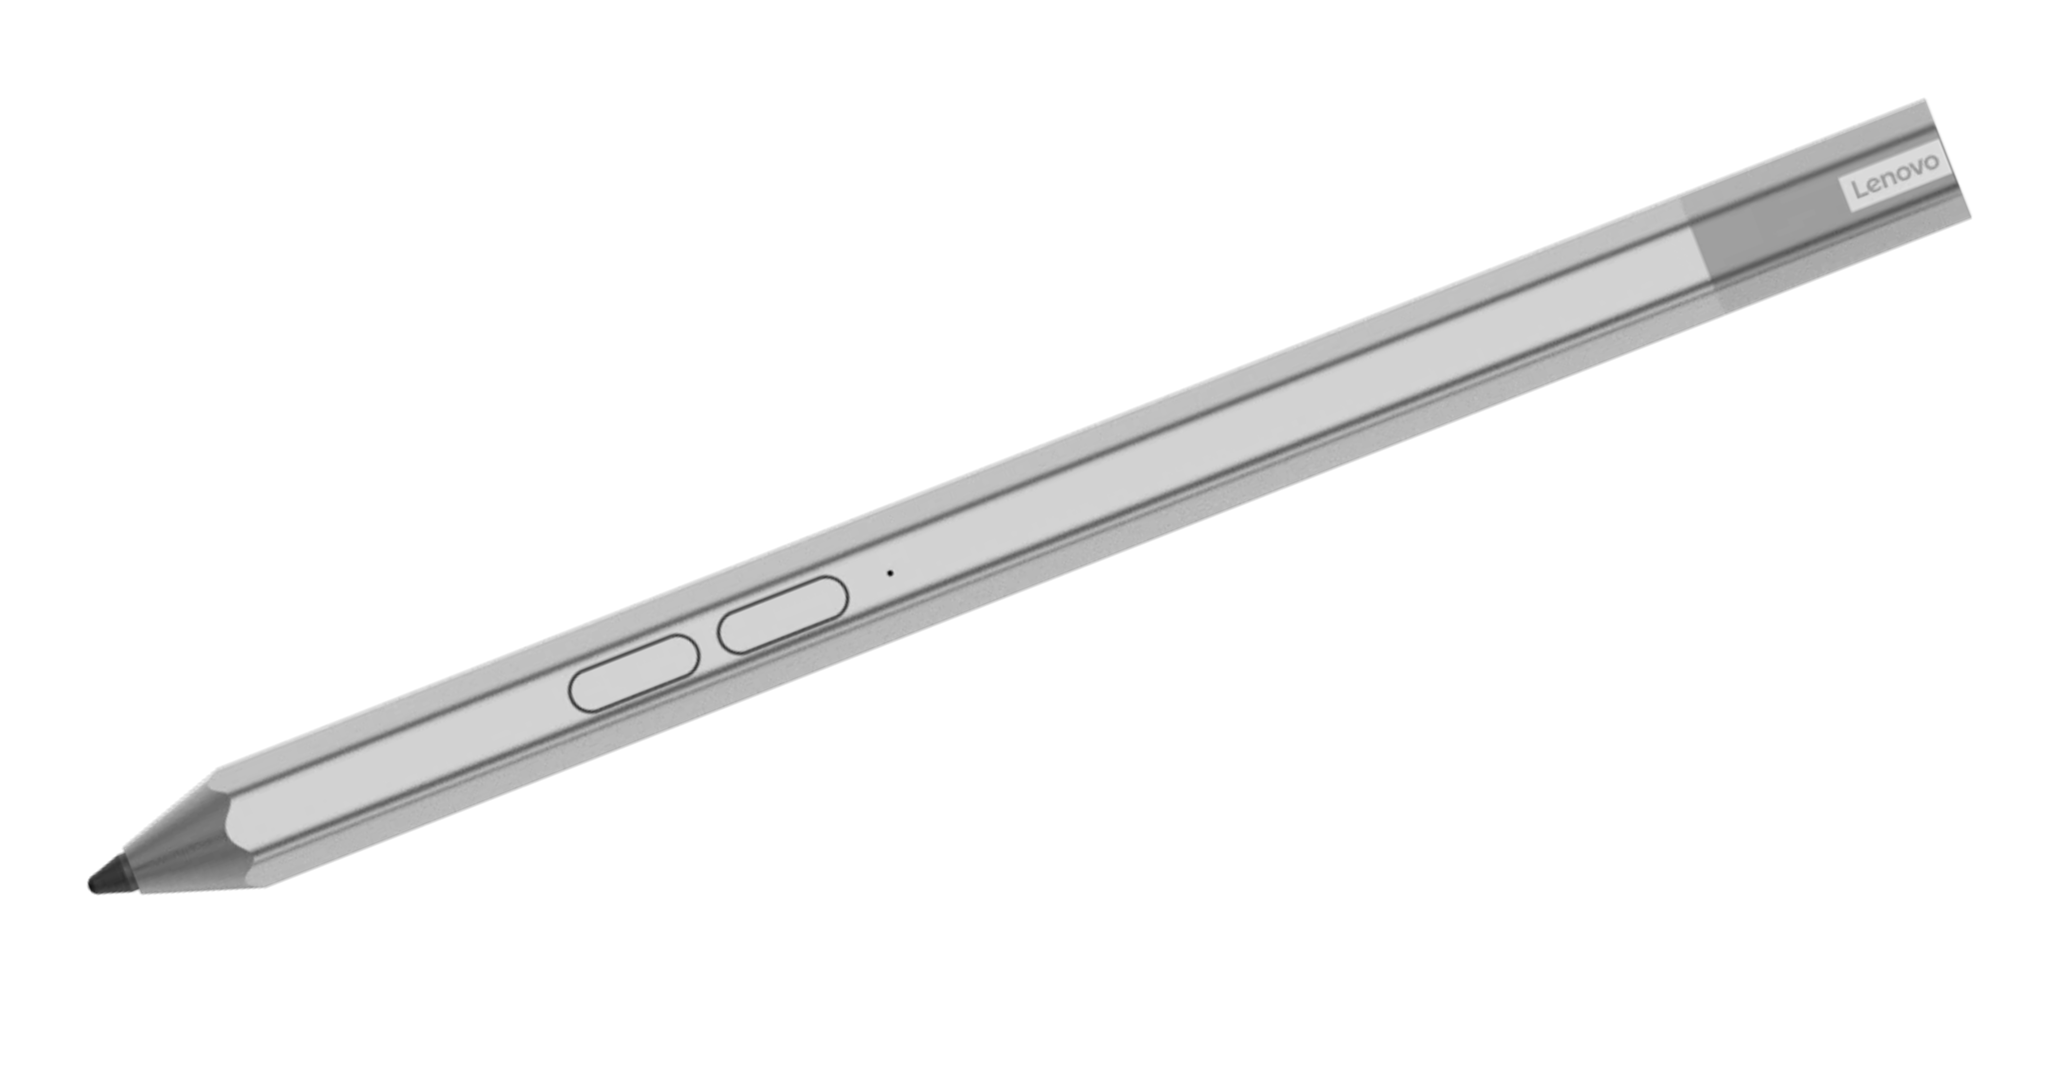 Bild von Lenovo Precision Pen 2 - Tablet - Lenovo - Metallisch - TB-J606 - TB-J606F - TB-J606N - TB-J607Z - Metall - RoHS,CE